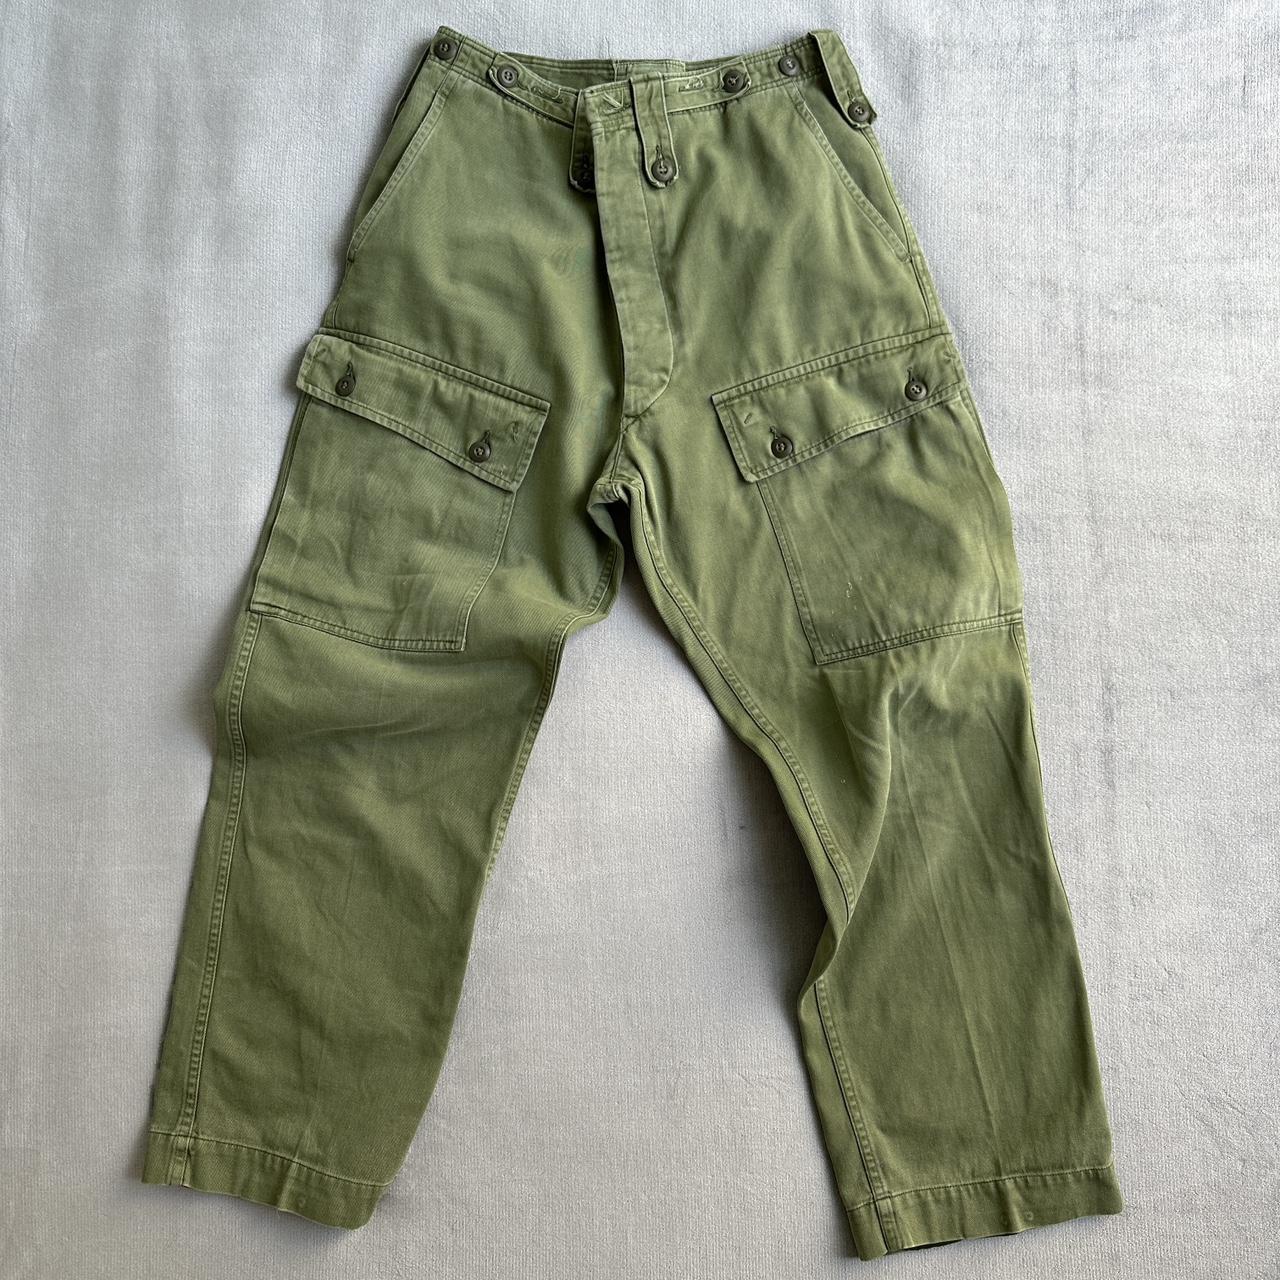 Vintage Military Army Surplus Fatigues Trousers... - Depop